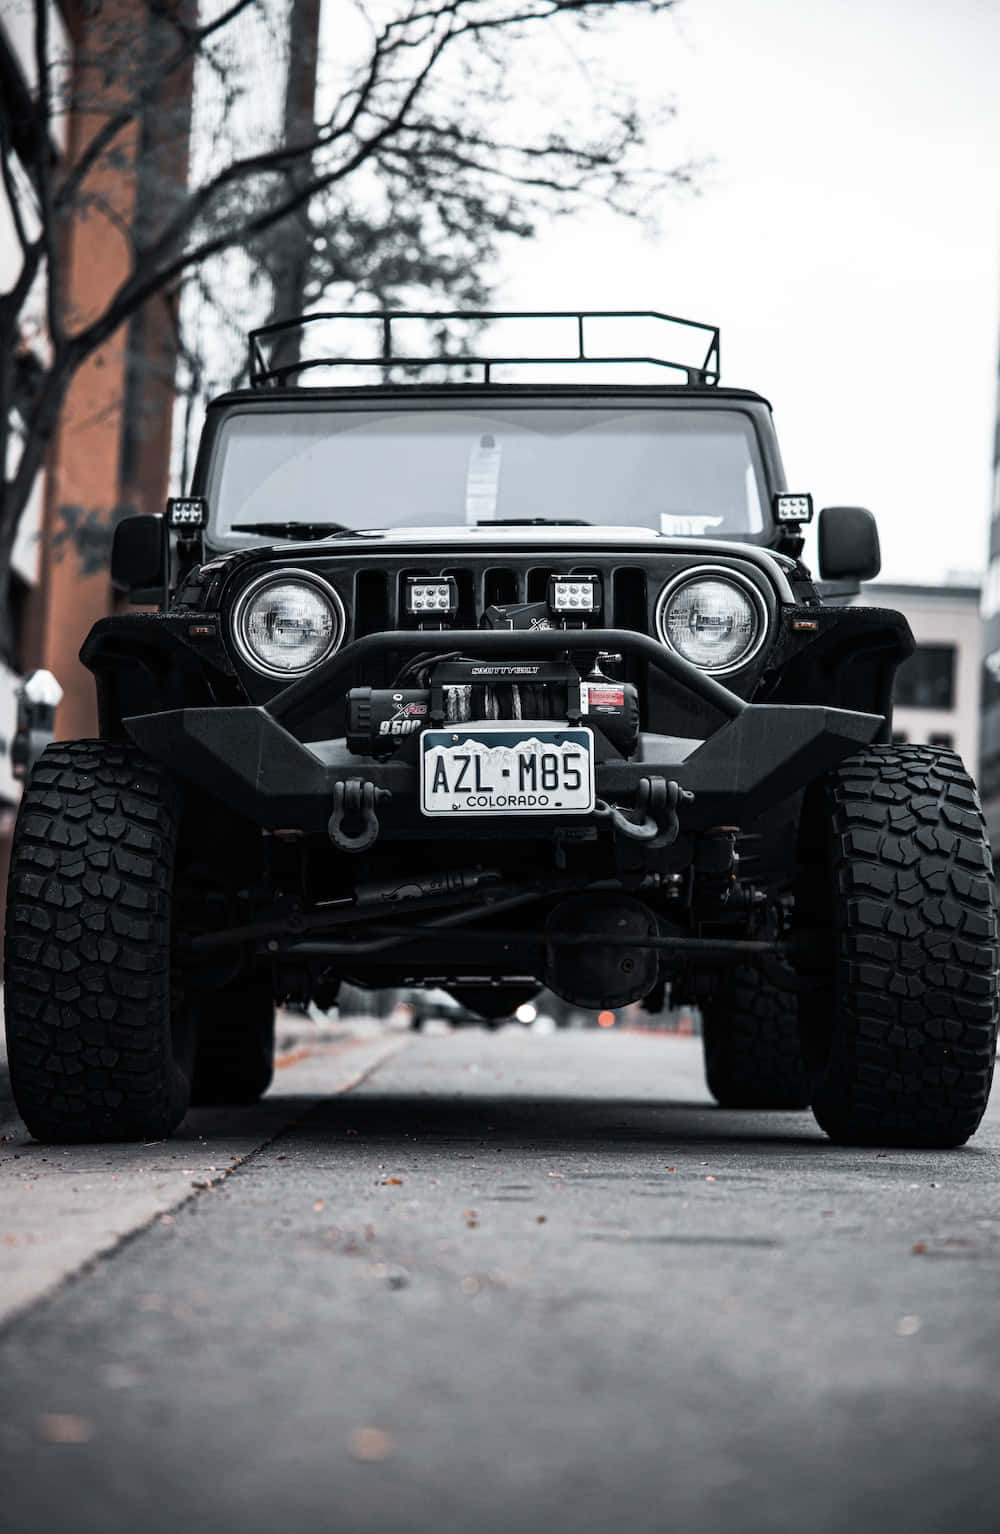 A Black Jeep Parked On A Street